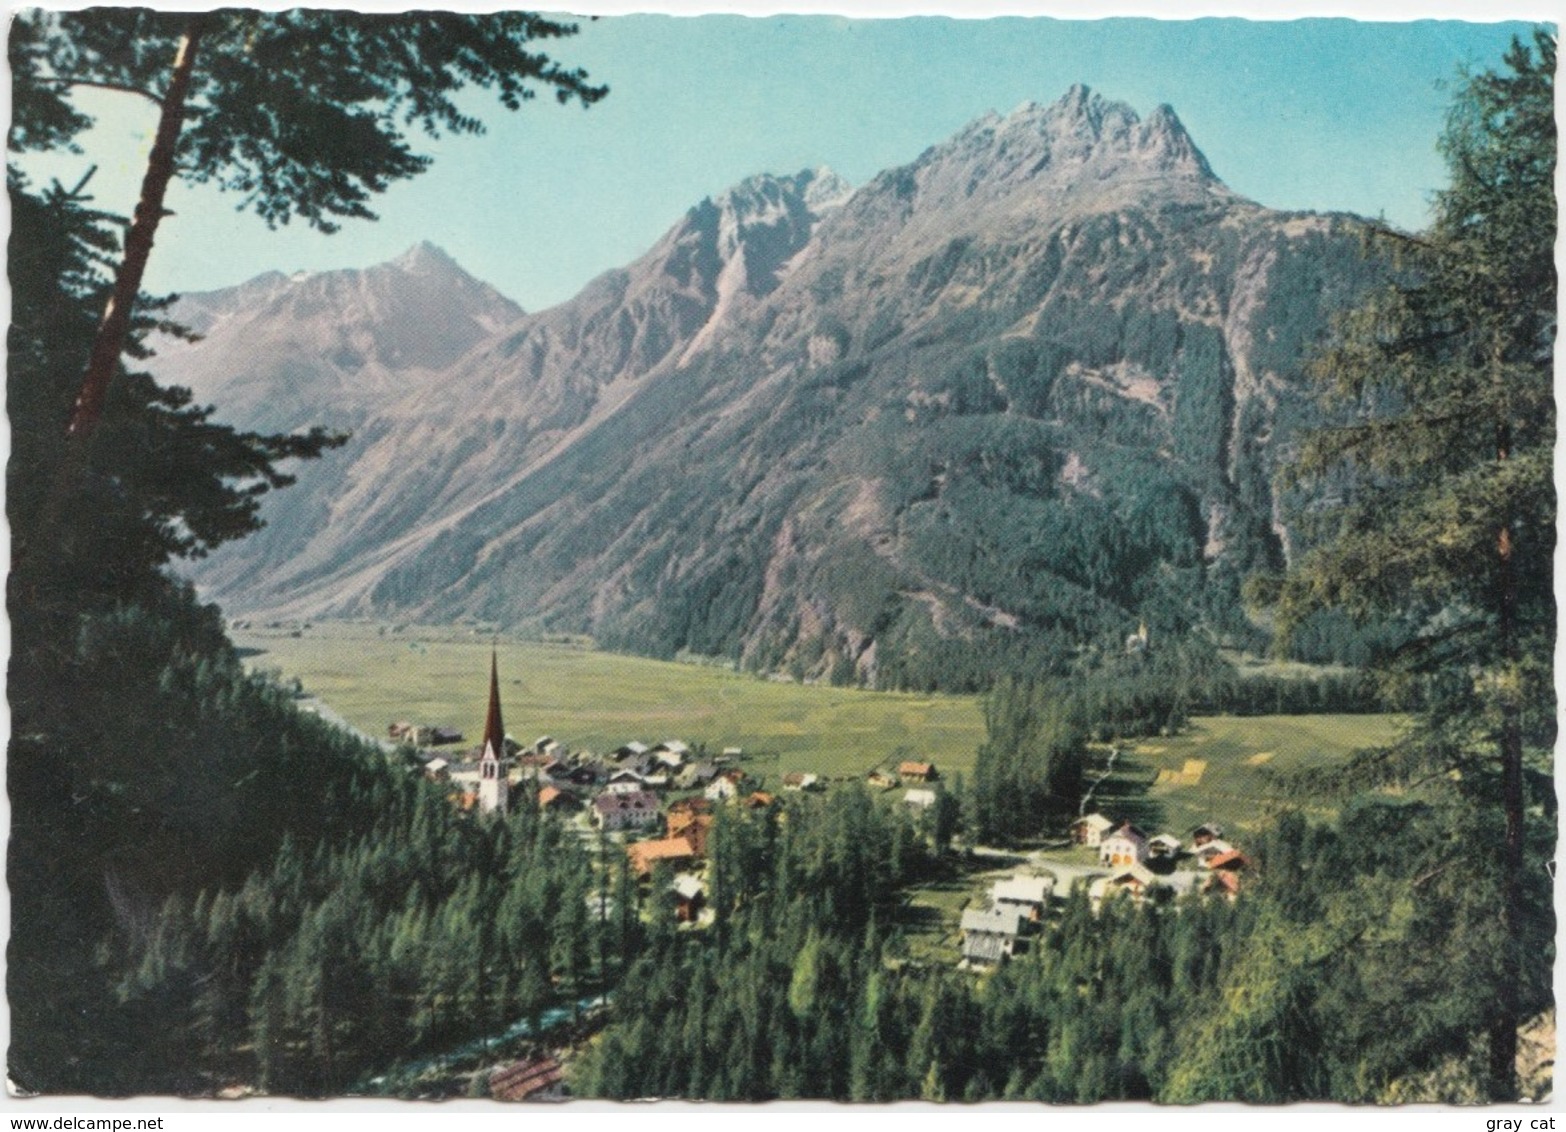 LANGENFELD Im Otztal, 1175 M, Tirol, Austria, 1961 Used Postcard [22026] - Längenfeld